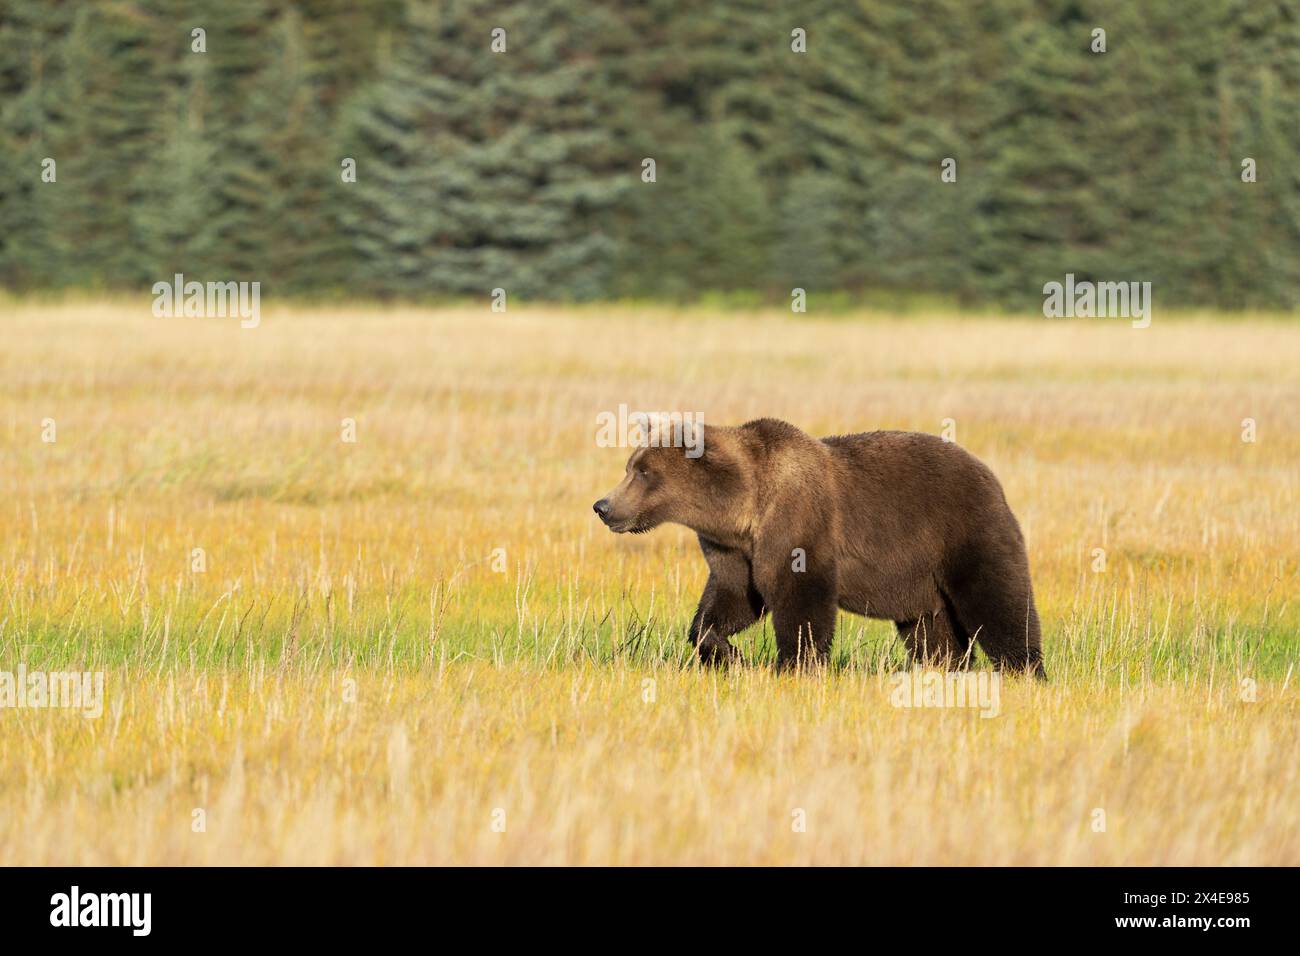 USA, Alaska, Lake Clark National Park. Subadult grizzly bear crosses grassy meadow. Stock Photo